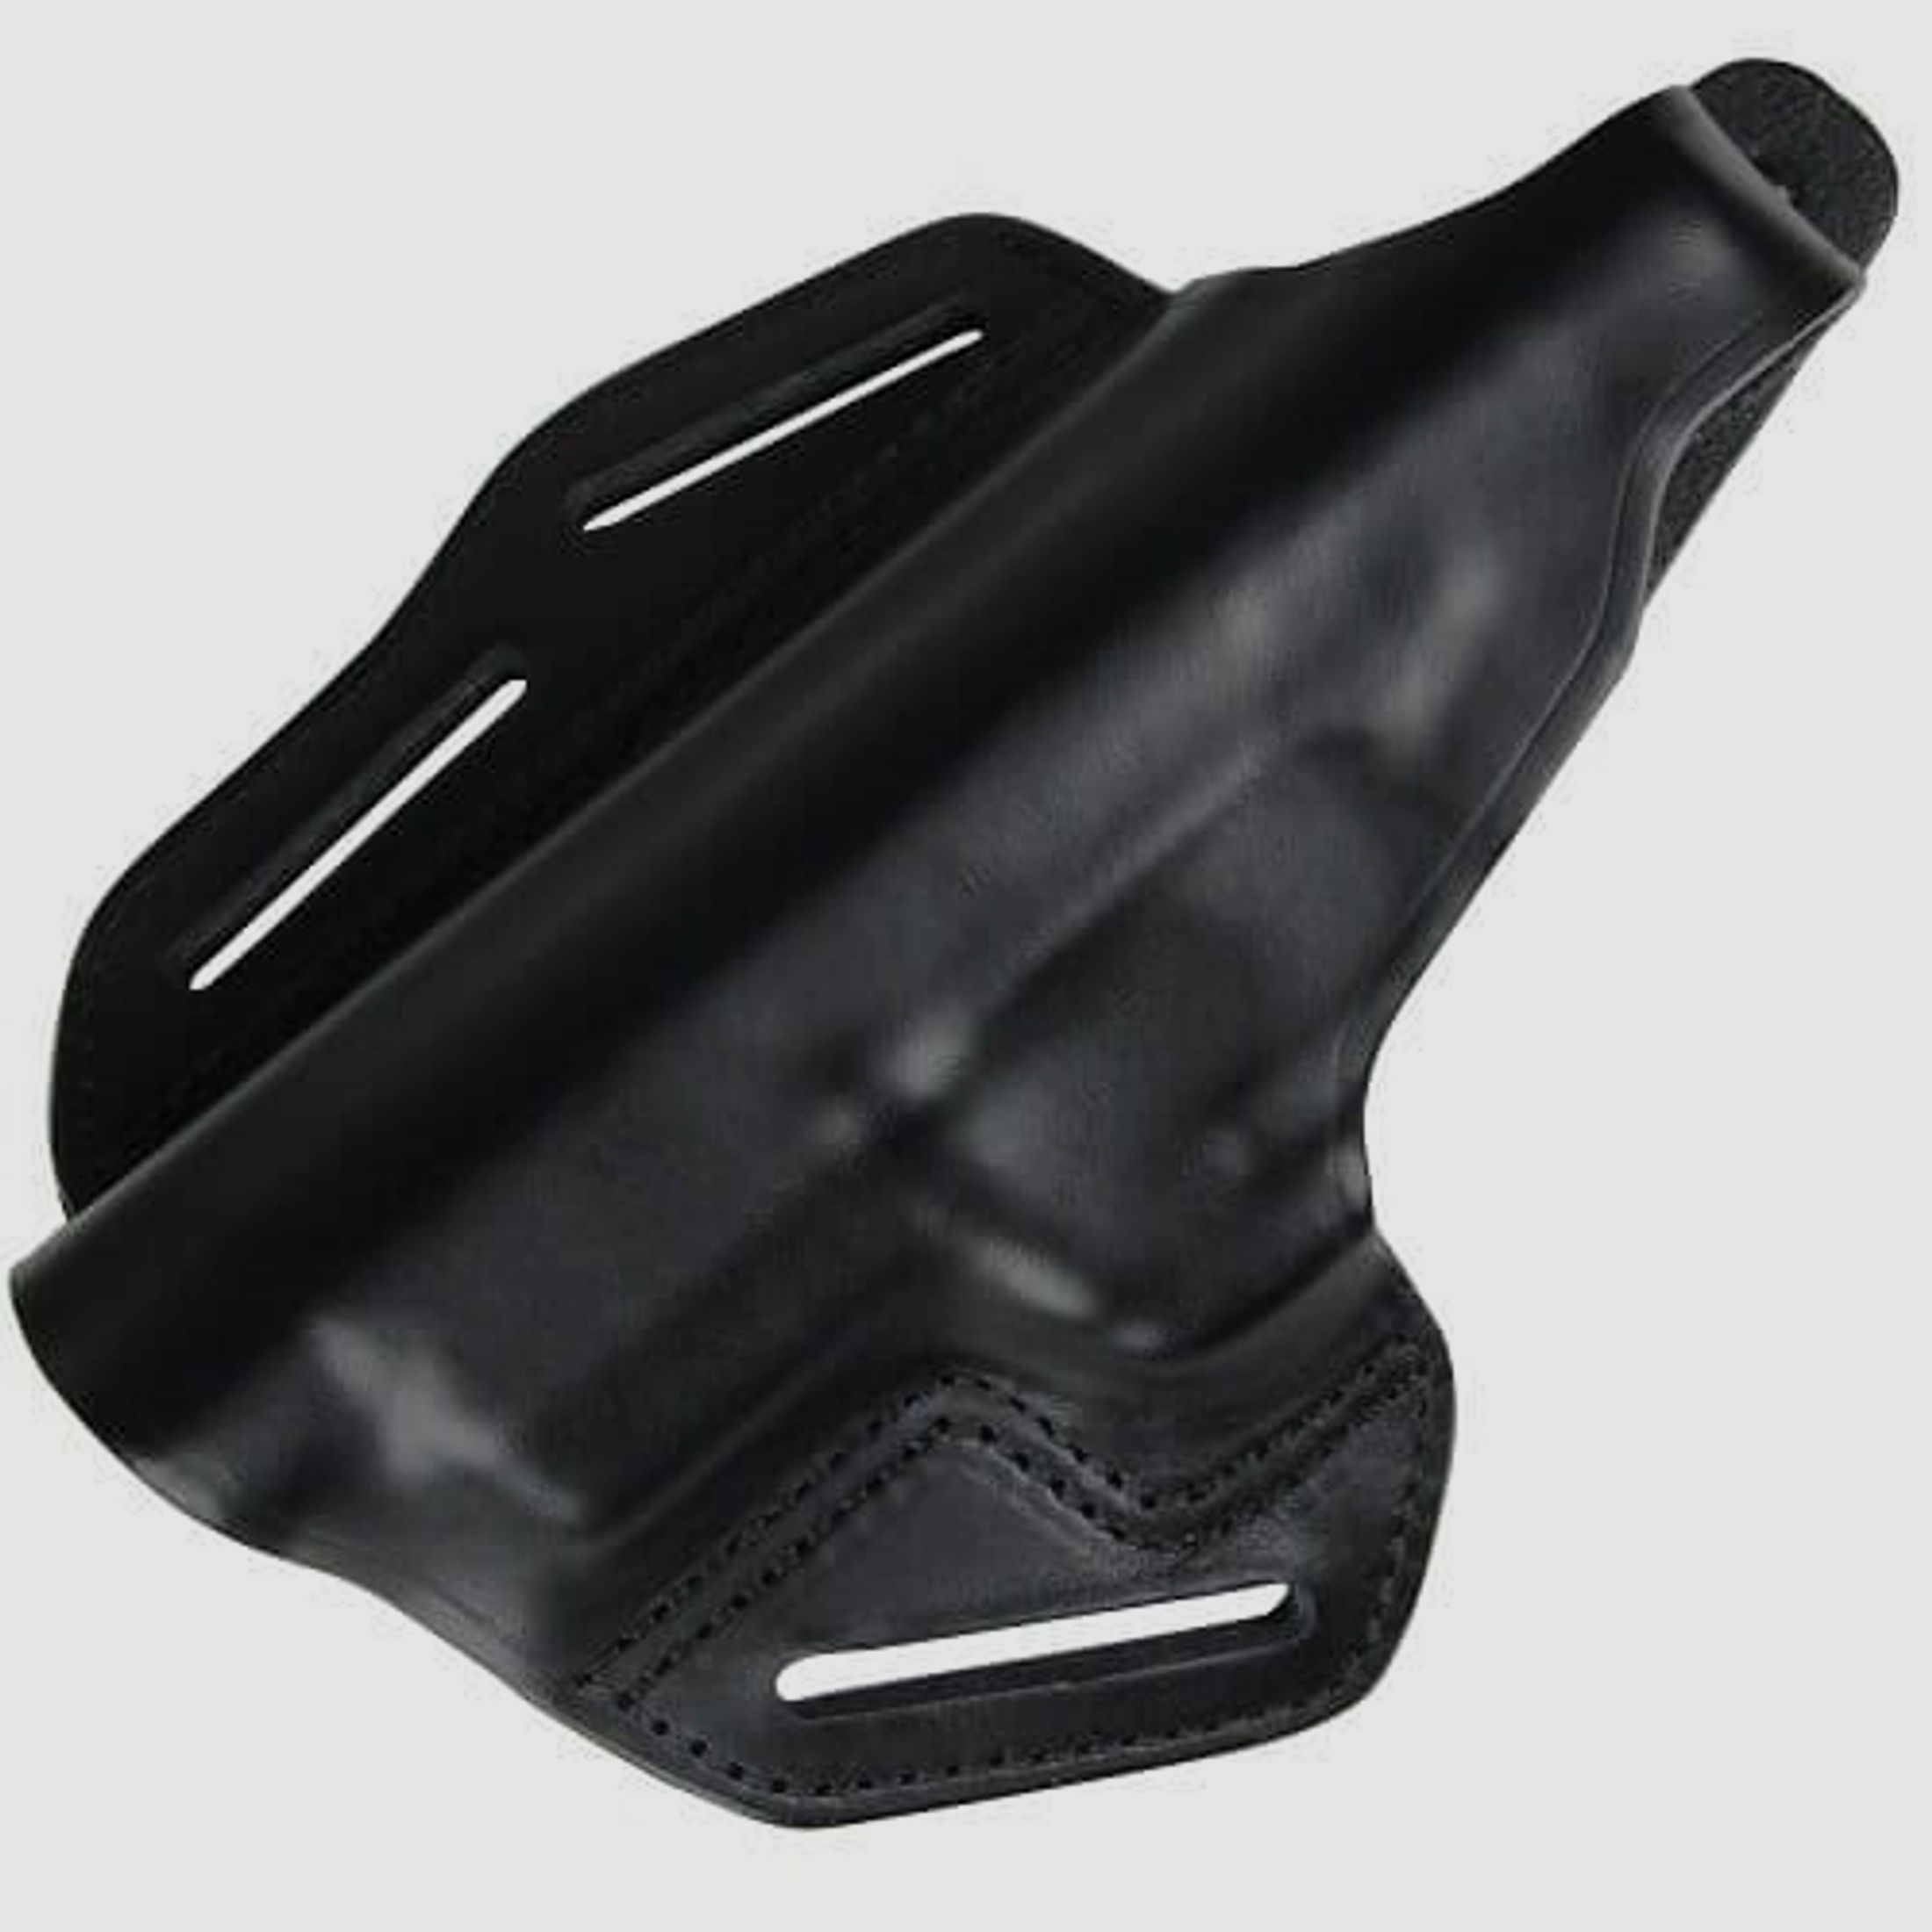 JPX2 Leder-Gürtelholster für Rechtshänder